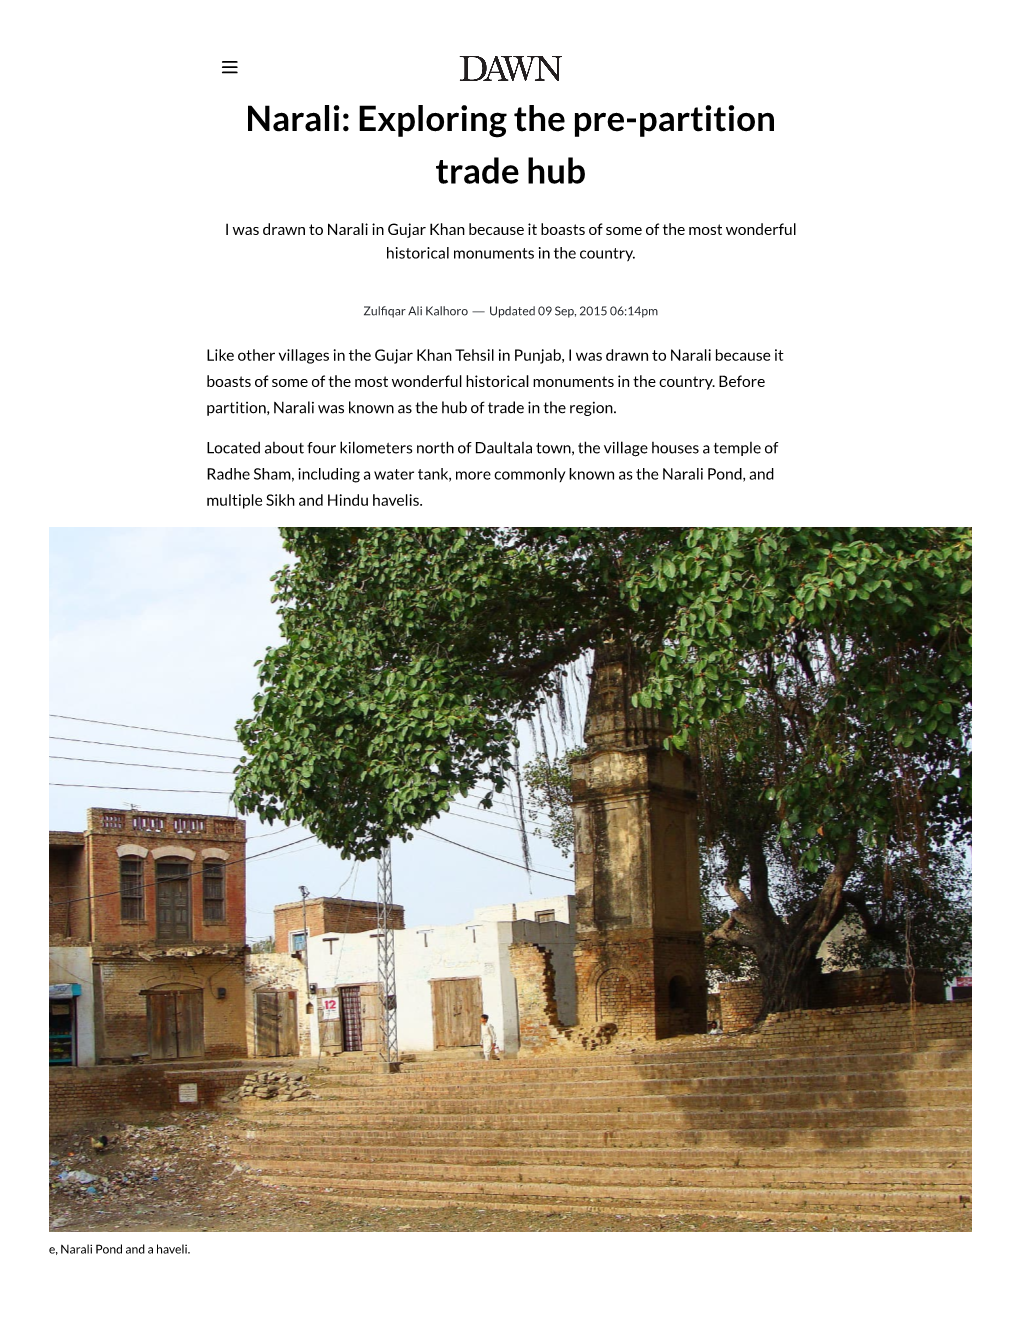 Narali: Exploring the Pre-Partition Trade Hub